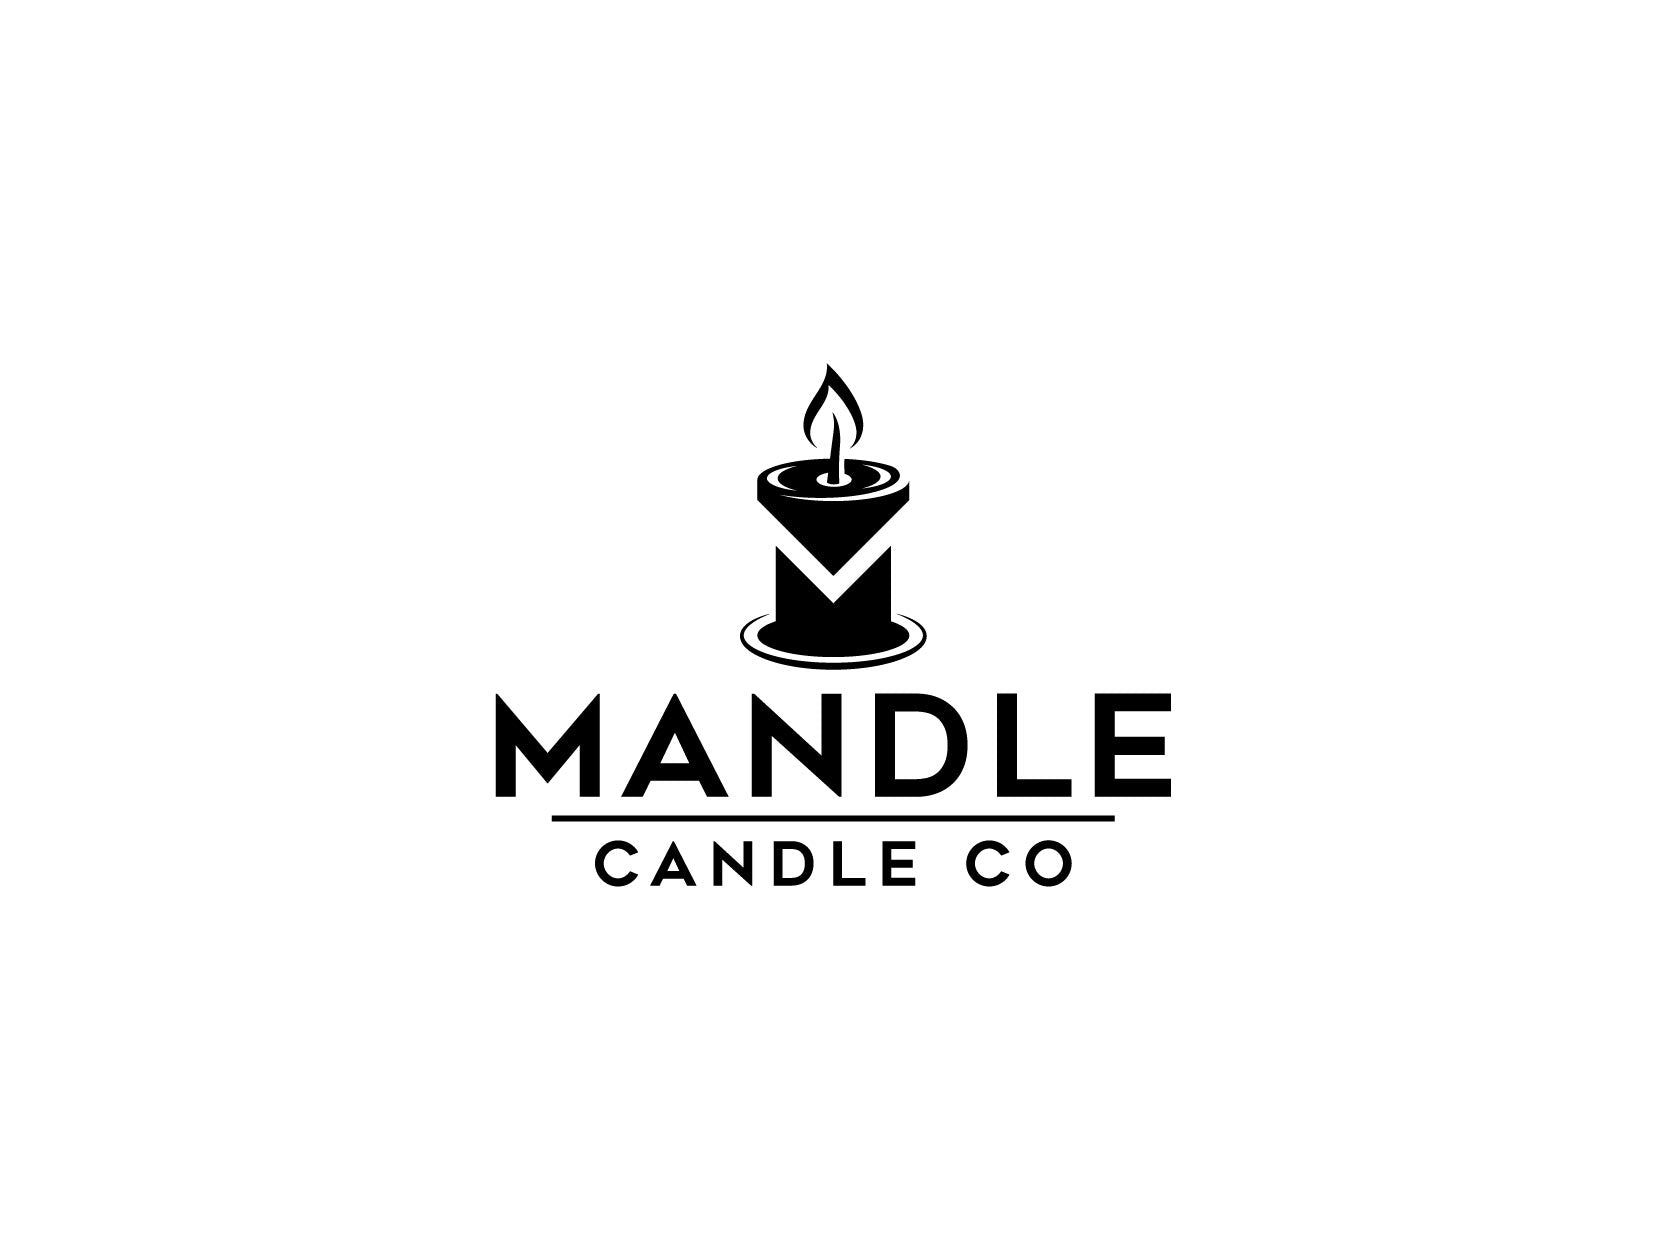 Mandle Candle Co